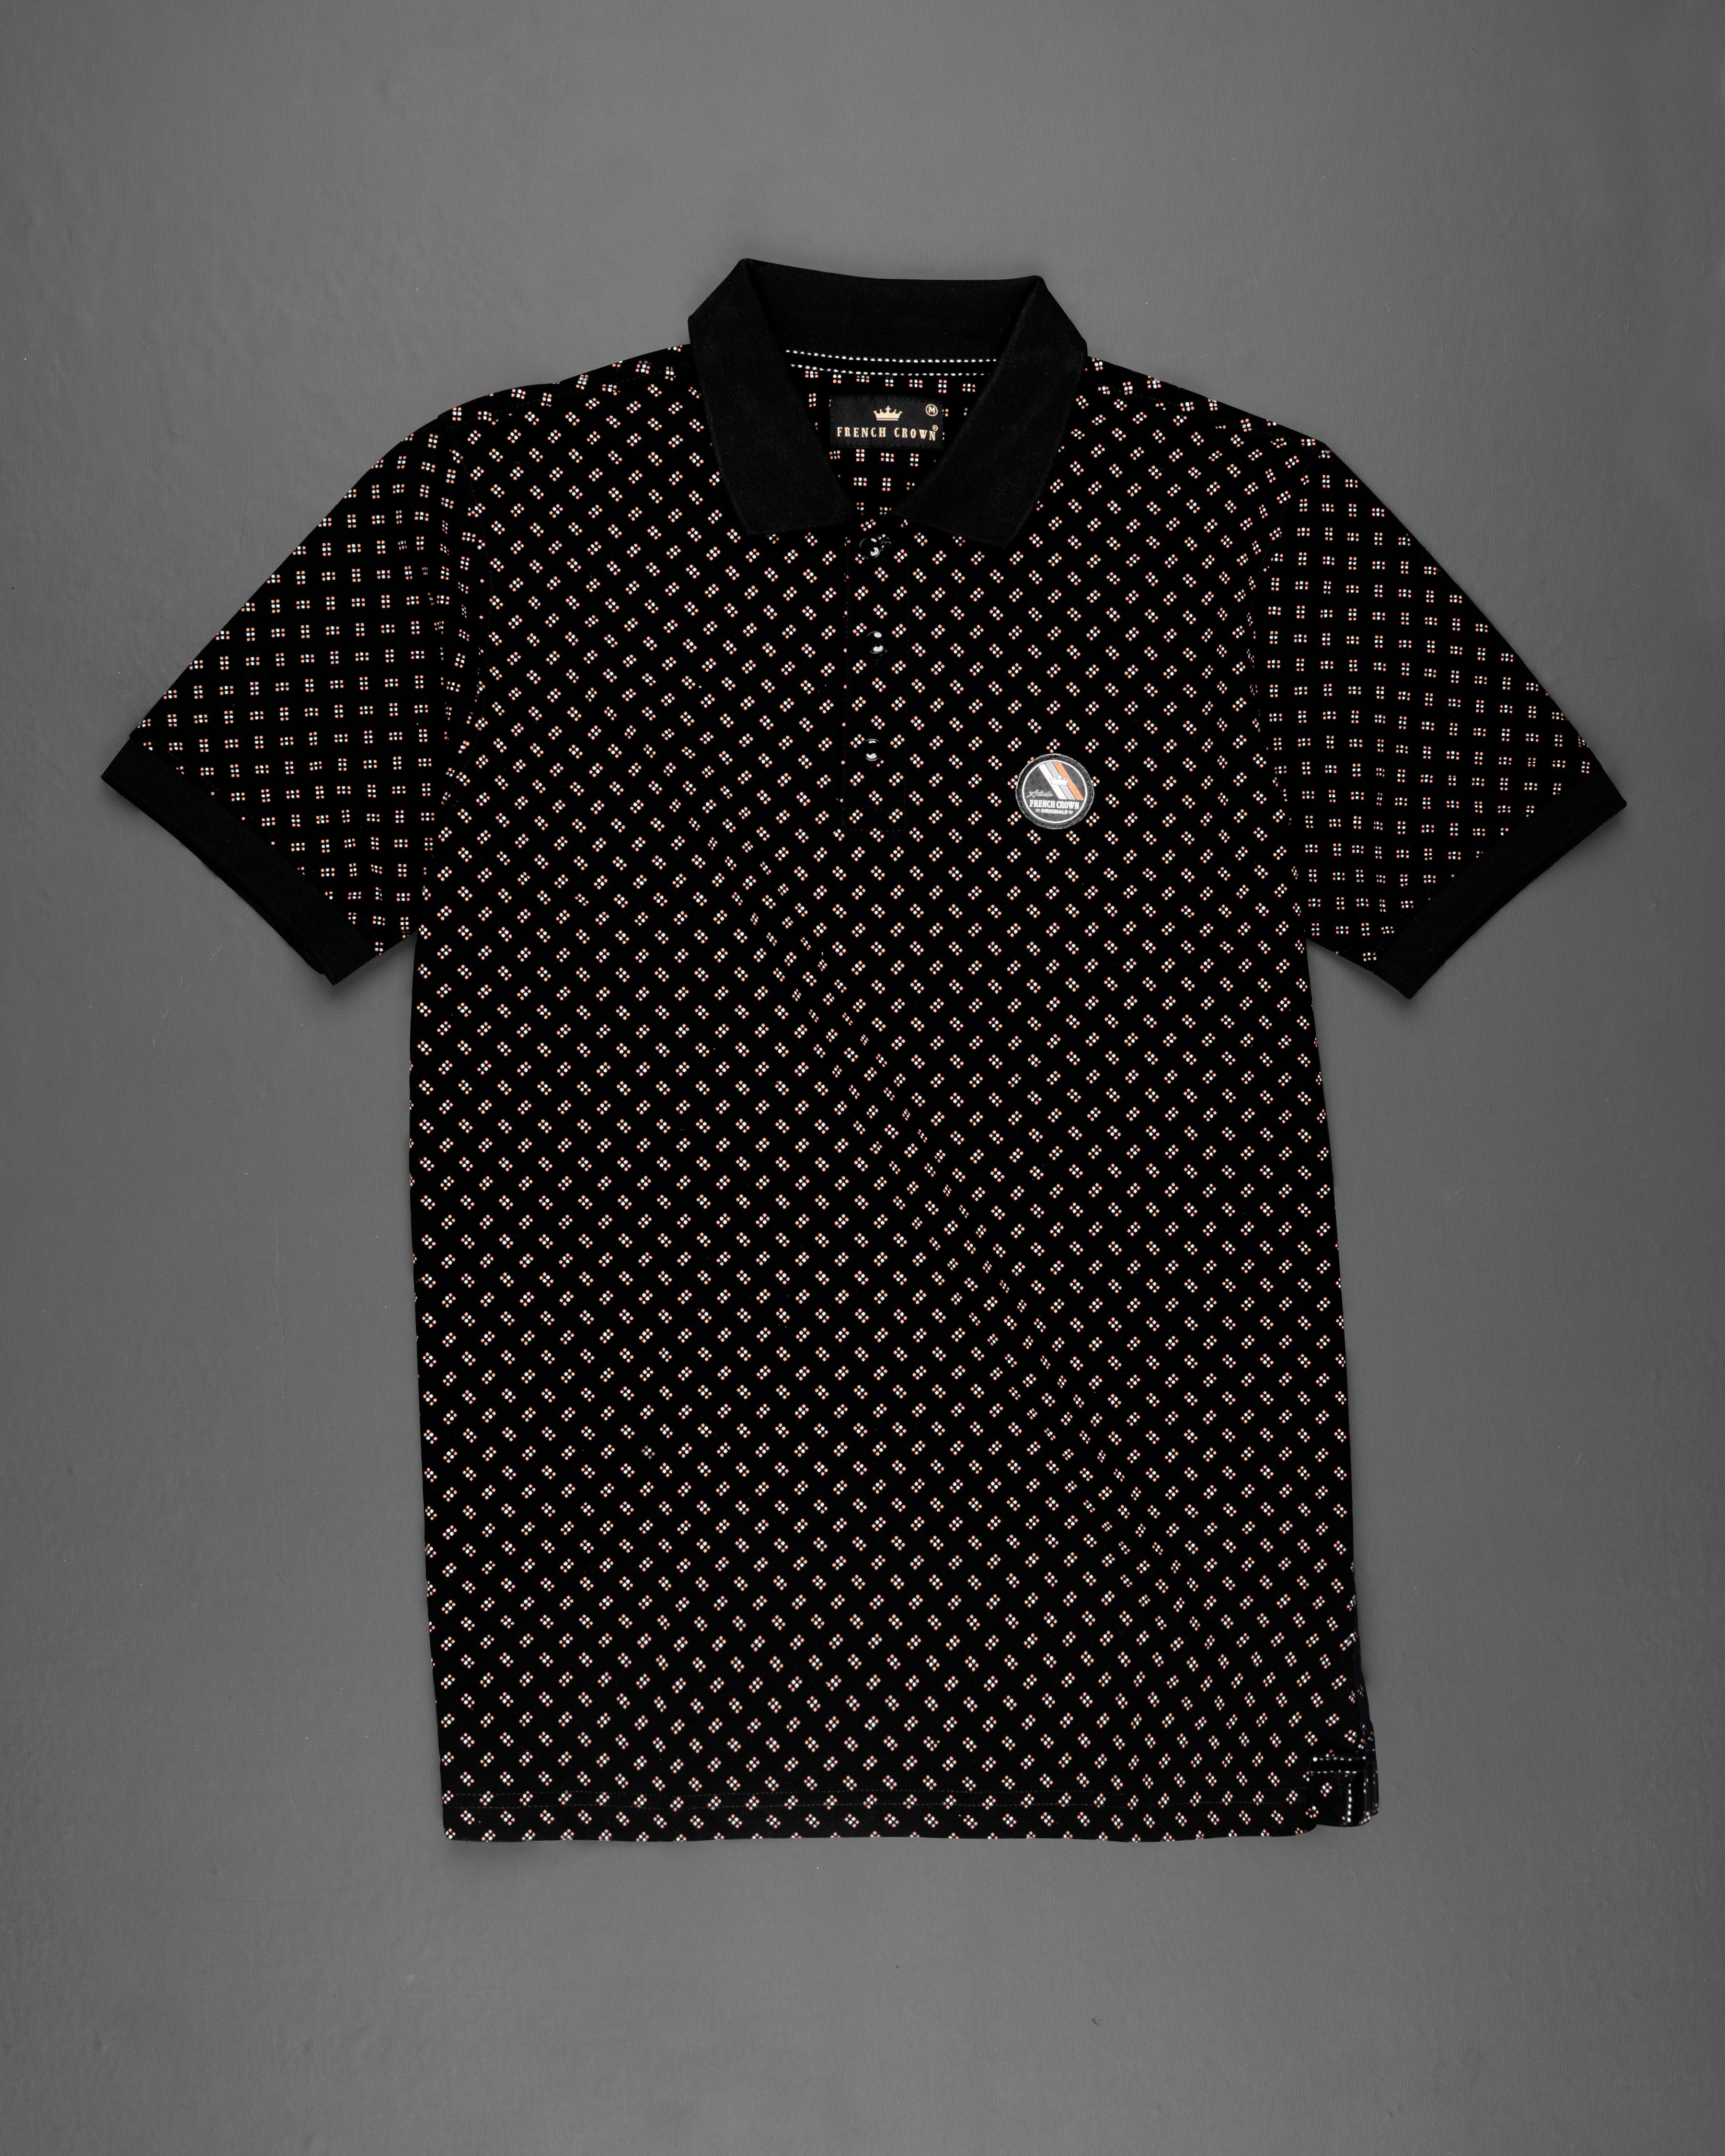 Black Shirt Matching Pant Ideas  Black Shirt Combination Pant blackshirt   YouTube